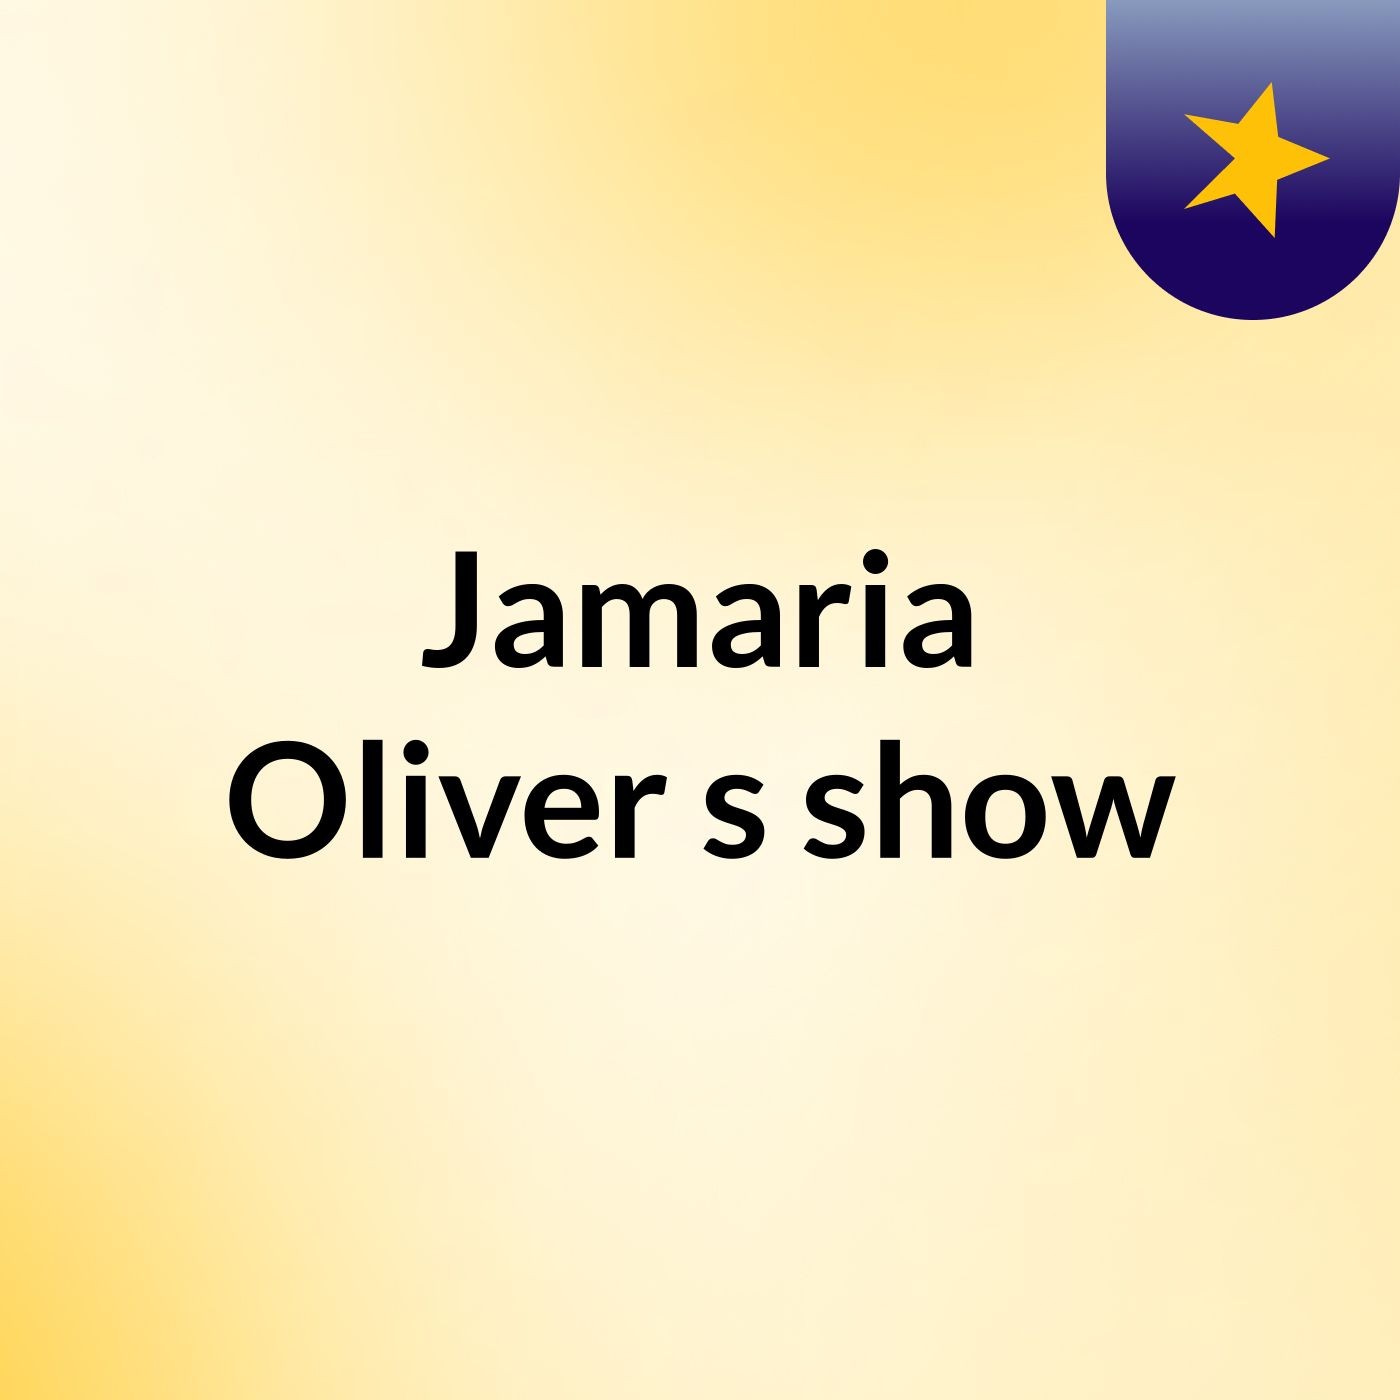 Jamaria Oliver's show